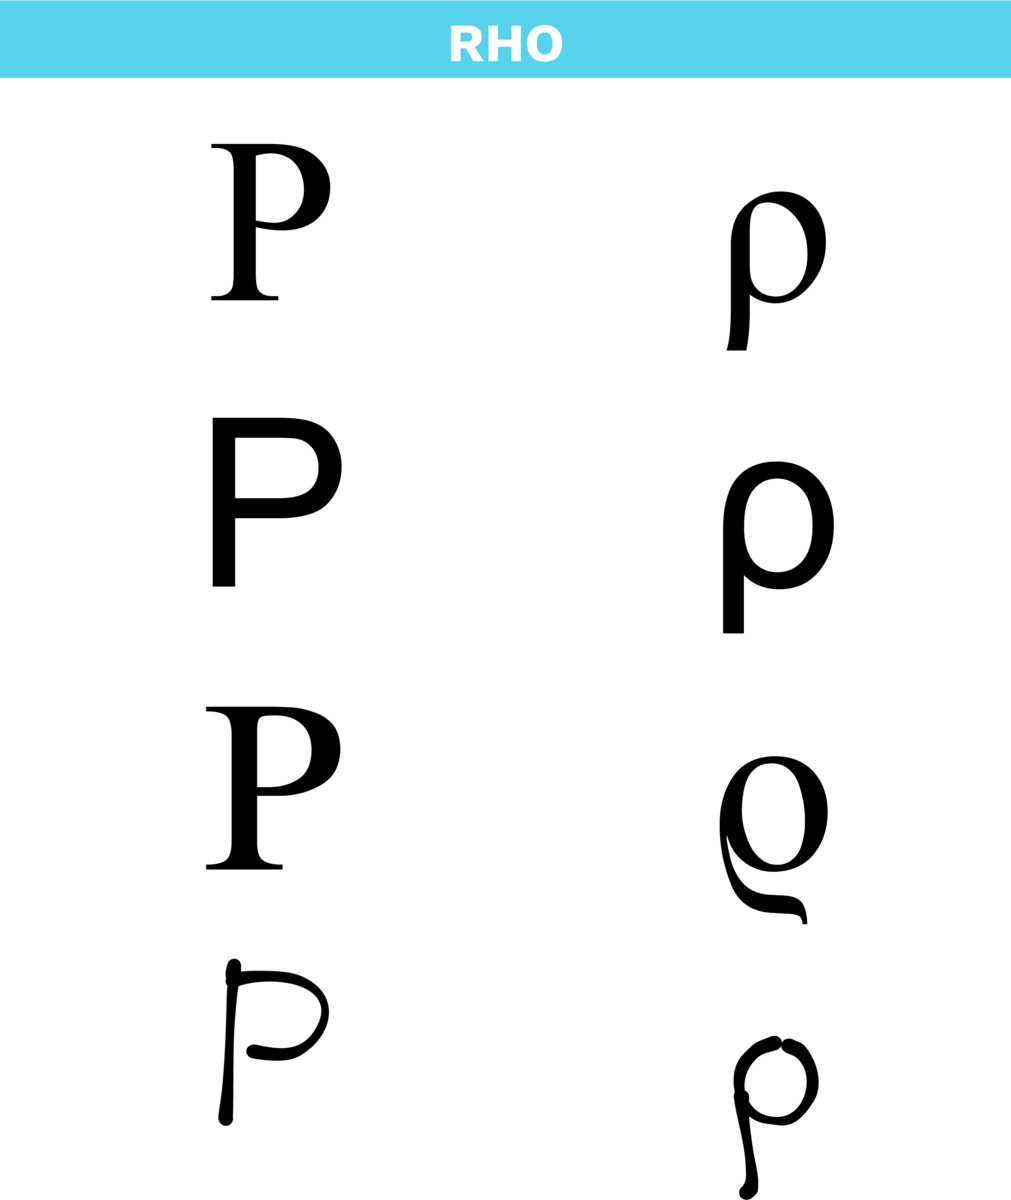 Bokstaven rho i det greske alfabetet i ulike skrifttyper